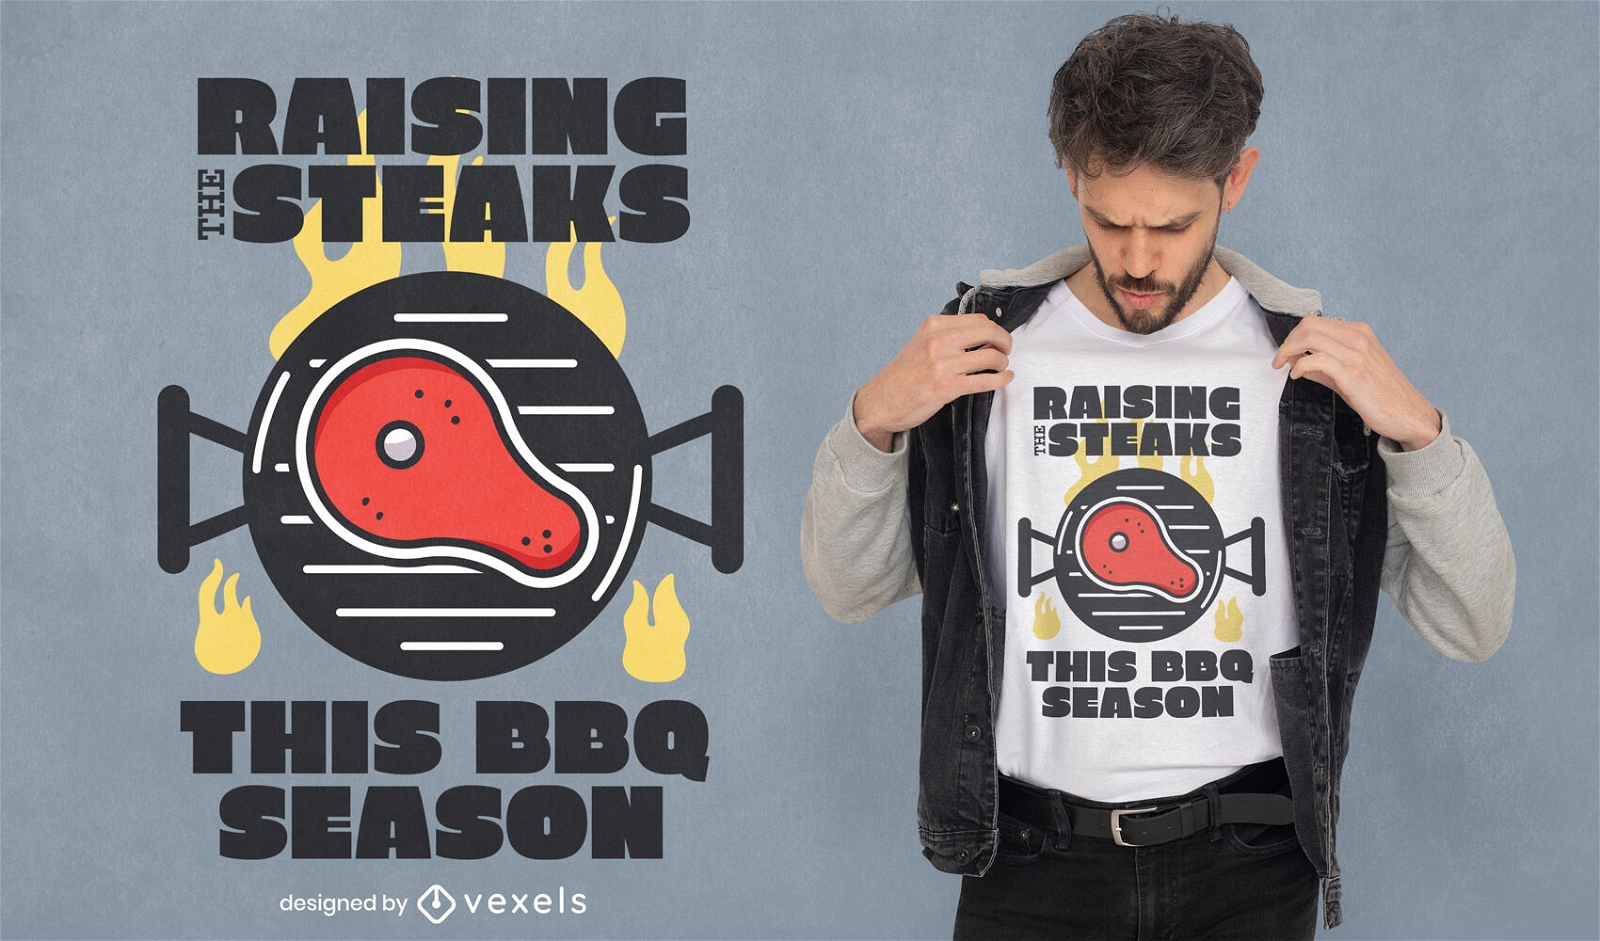 Raising the steaks BBQ diseño de camiseta